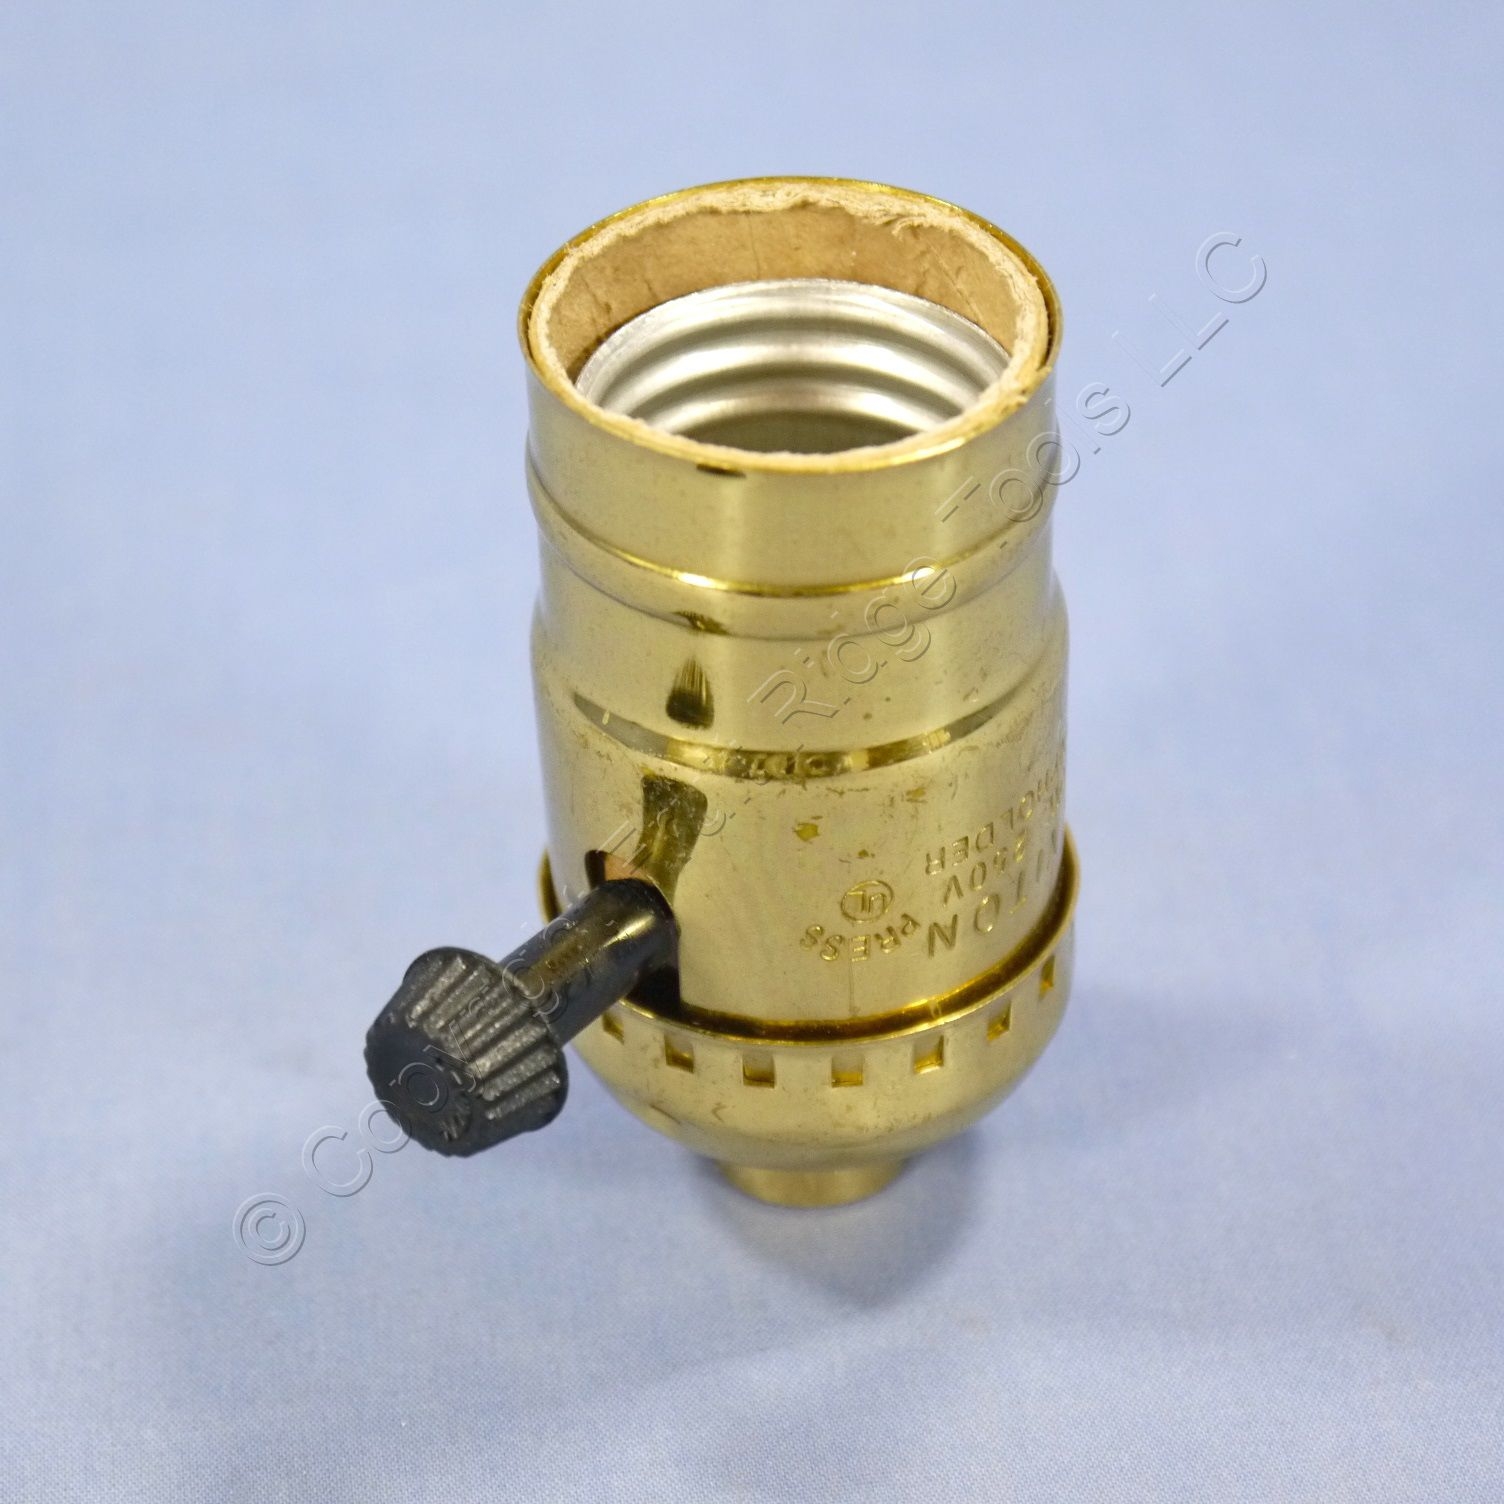 Leviton #7090 3-Way Interia Lamp Socket With 9-Ft 18-2 Gold Lamp Cord